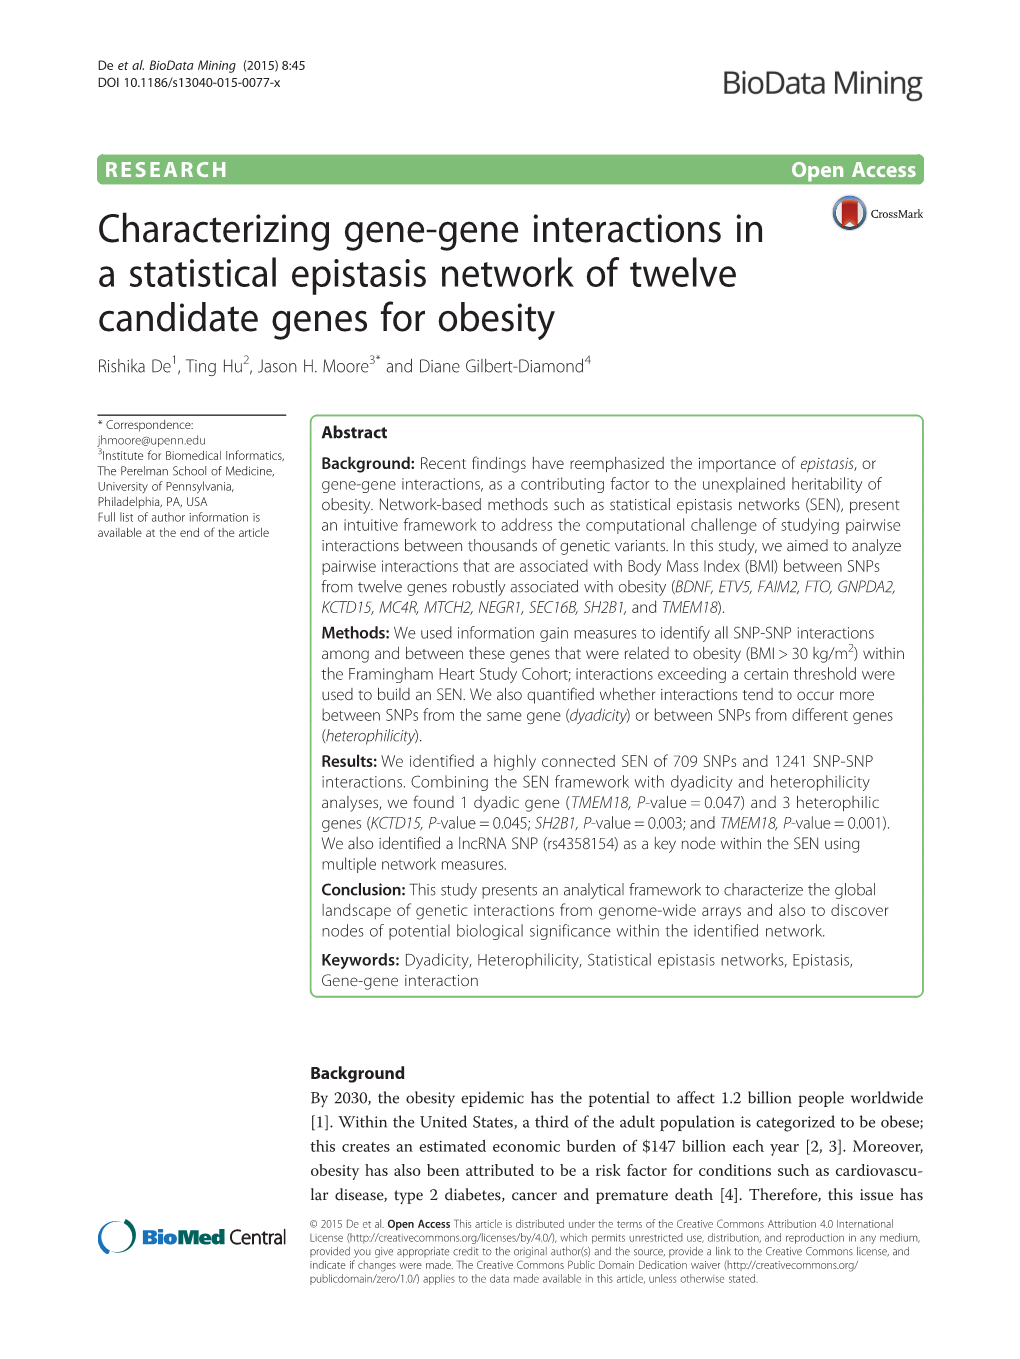 Characterizing Gene-Gene Interactions in a Statistical Epistasis Network of Twelve Candidate Genes for Obesity Rishika De1, Ting Hu2, Jason H